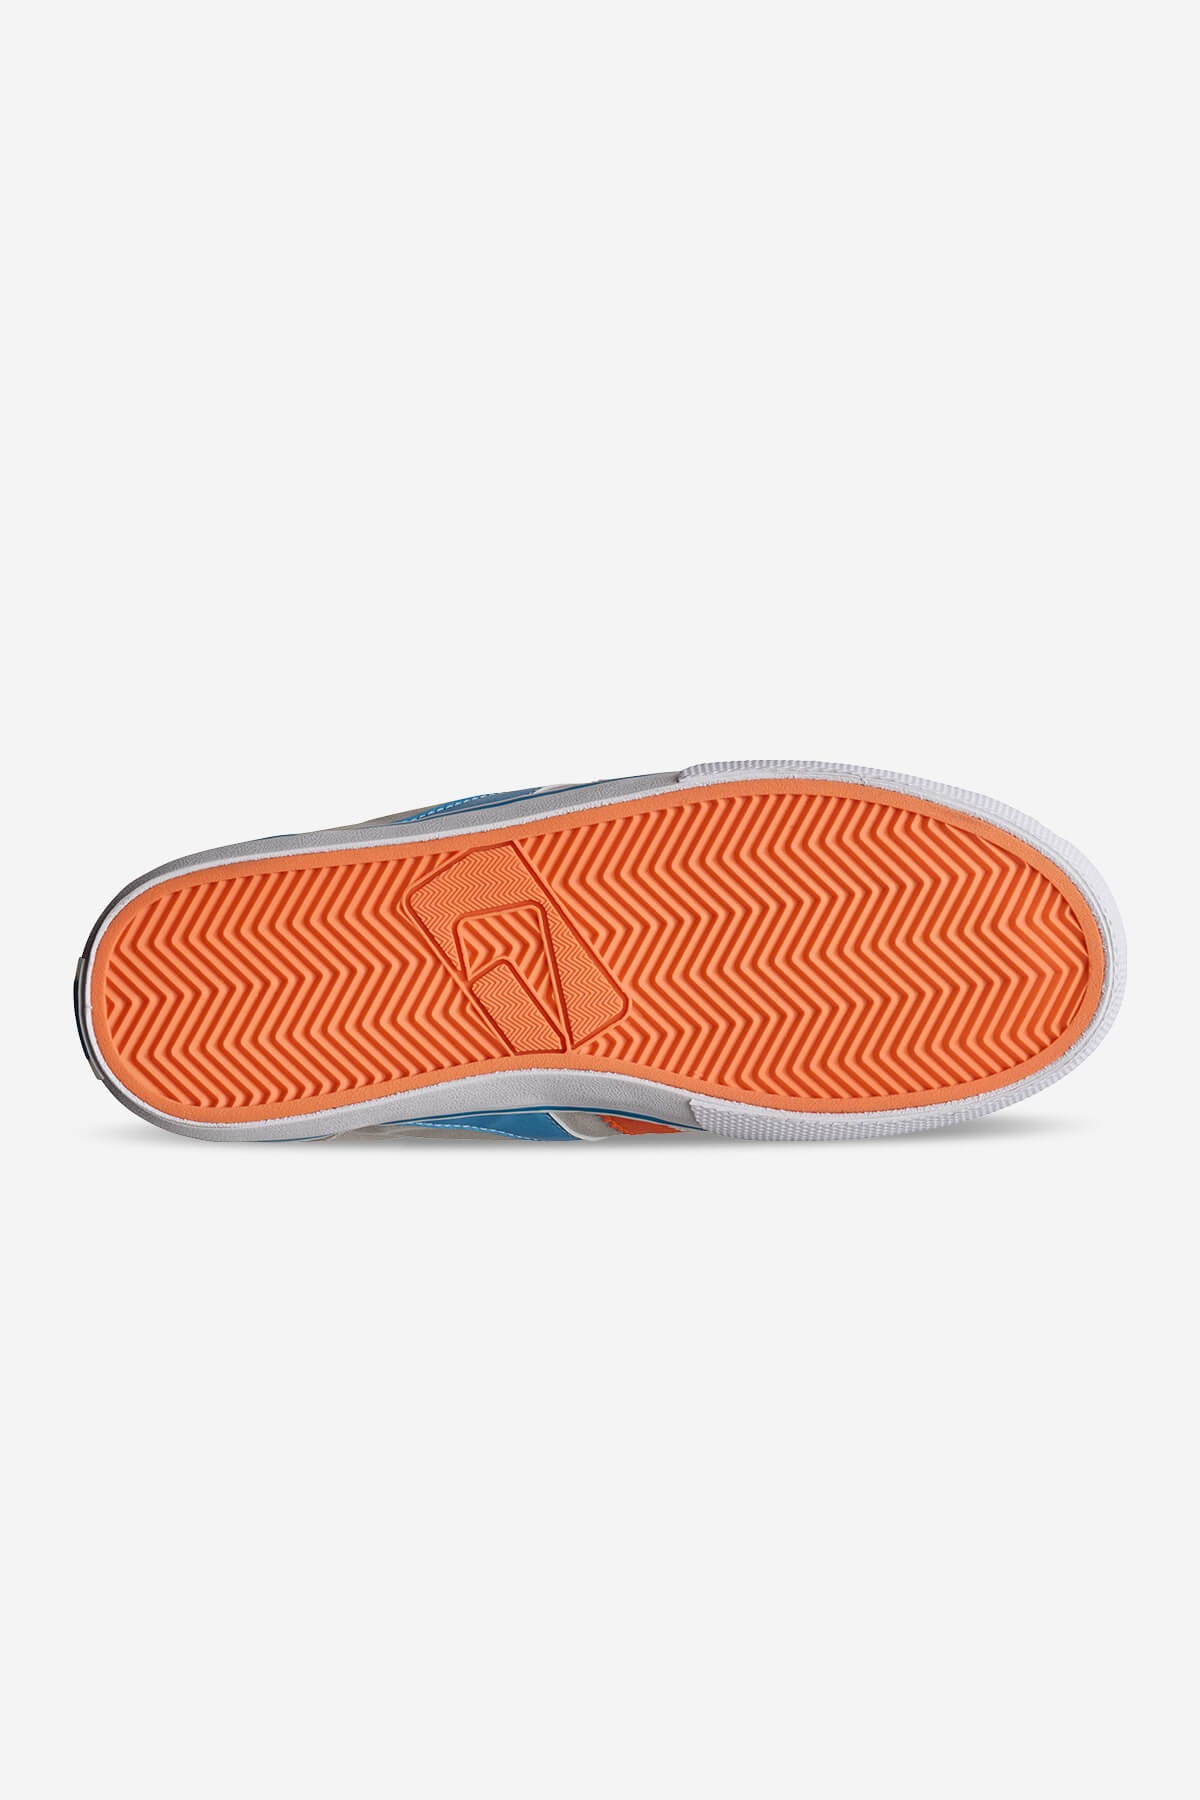 Globe - Encore 2 - Cloud/Blue/Orange - skateboard Shoes